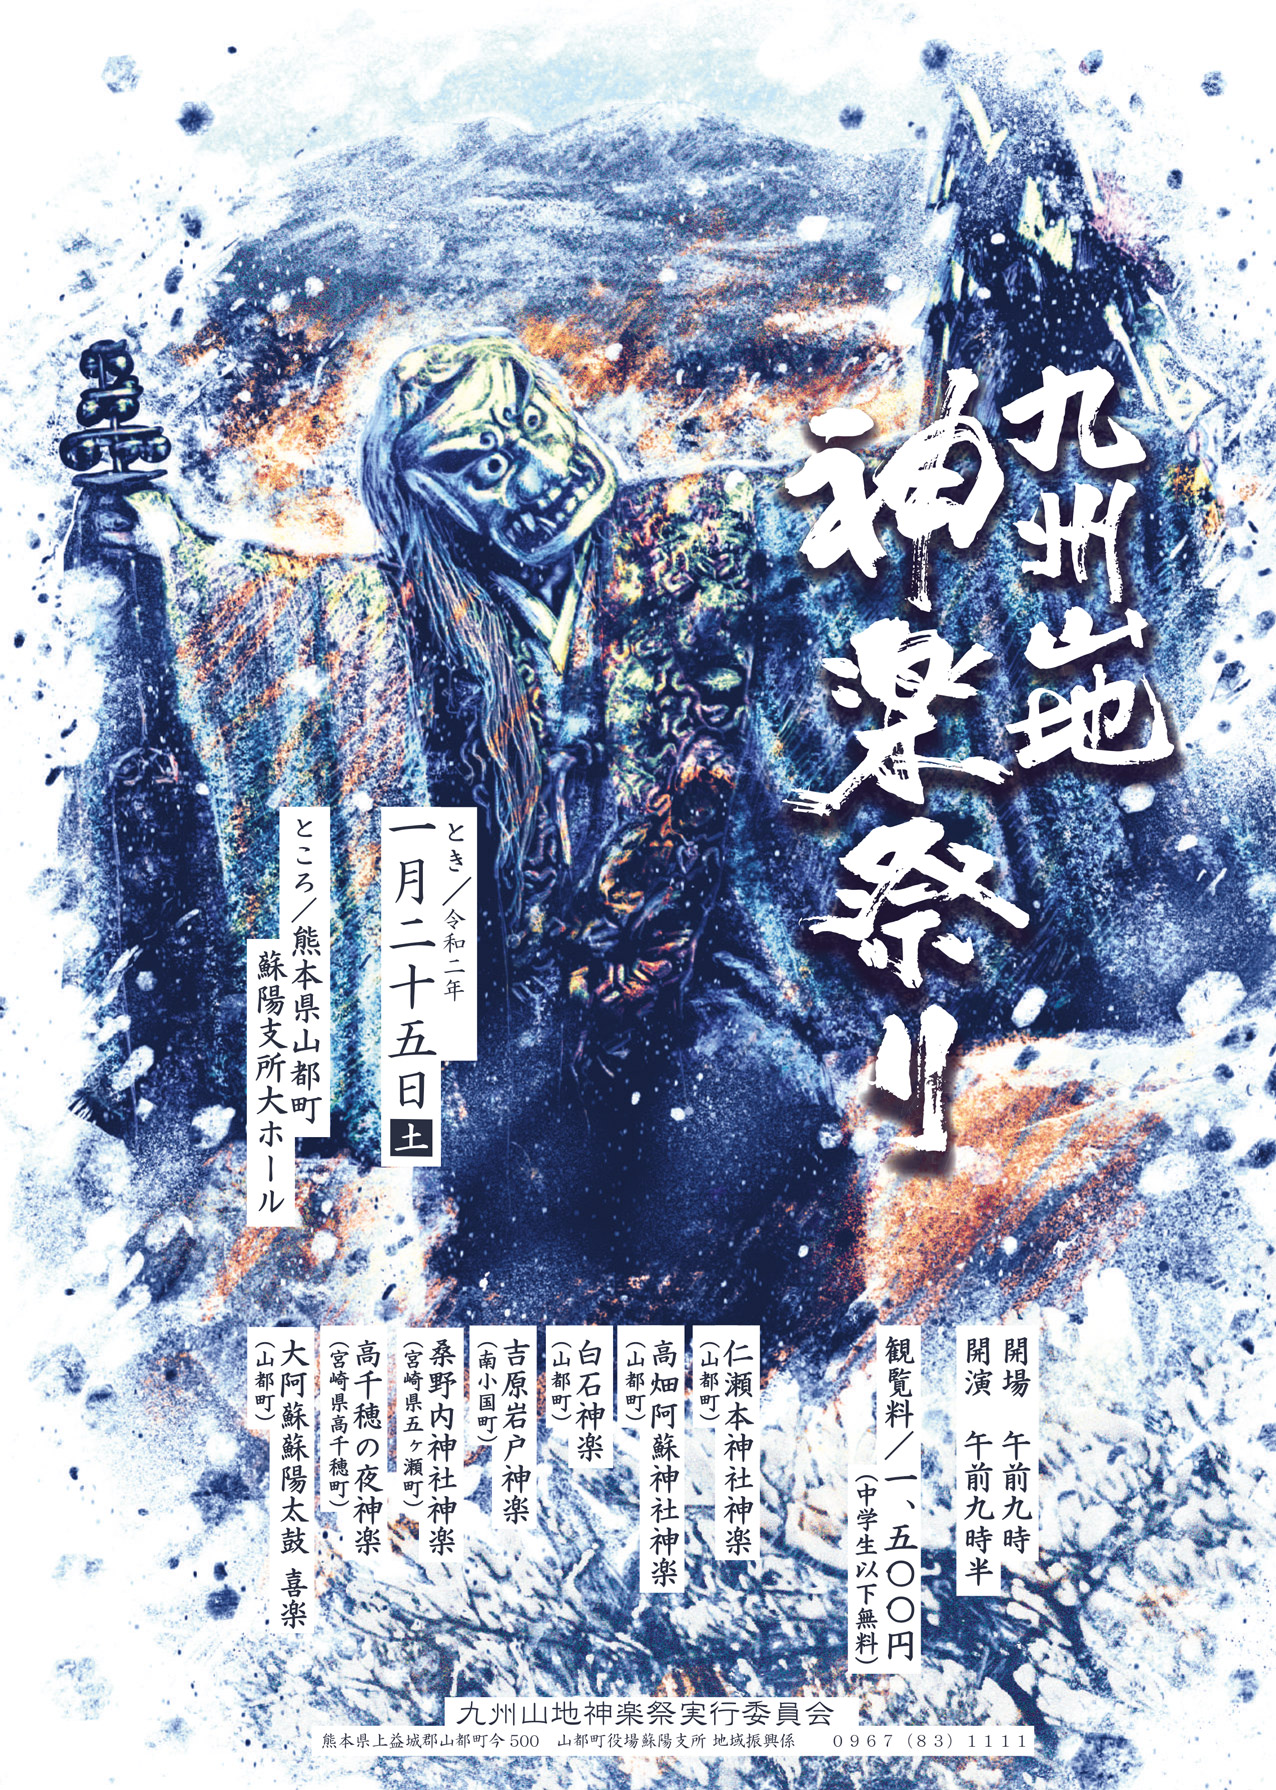 Kagura Festival 2020 poster